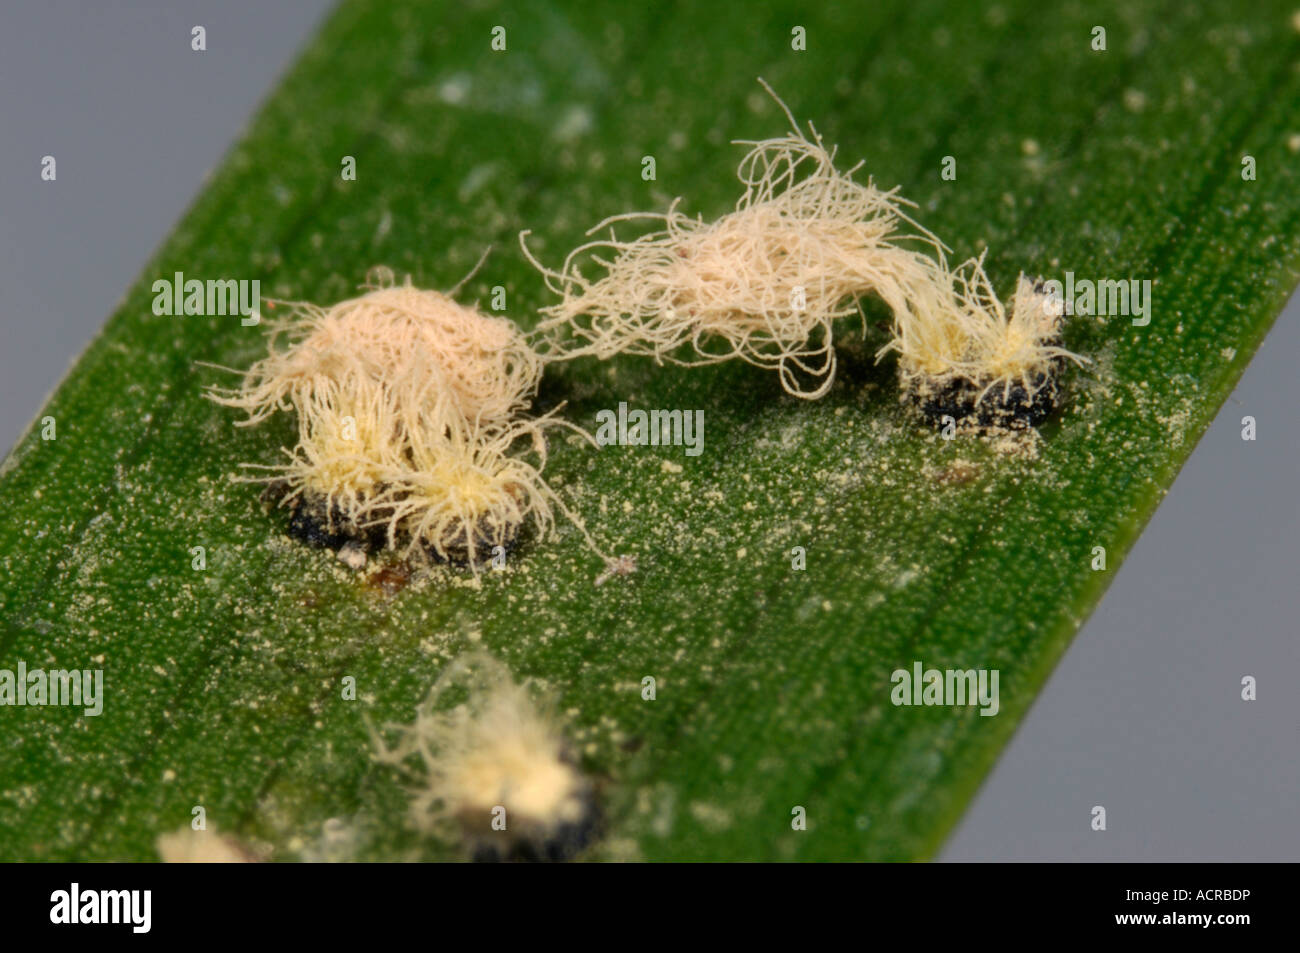 Palm false smut Graphiola phoenicis pustules sporulating on a palm leaf surface Stock Photo